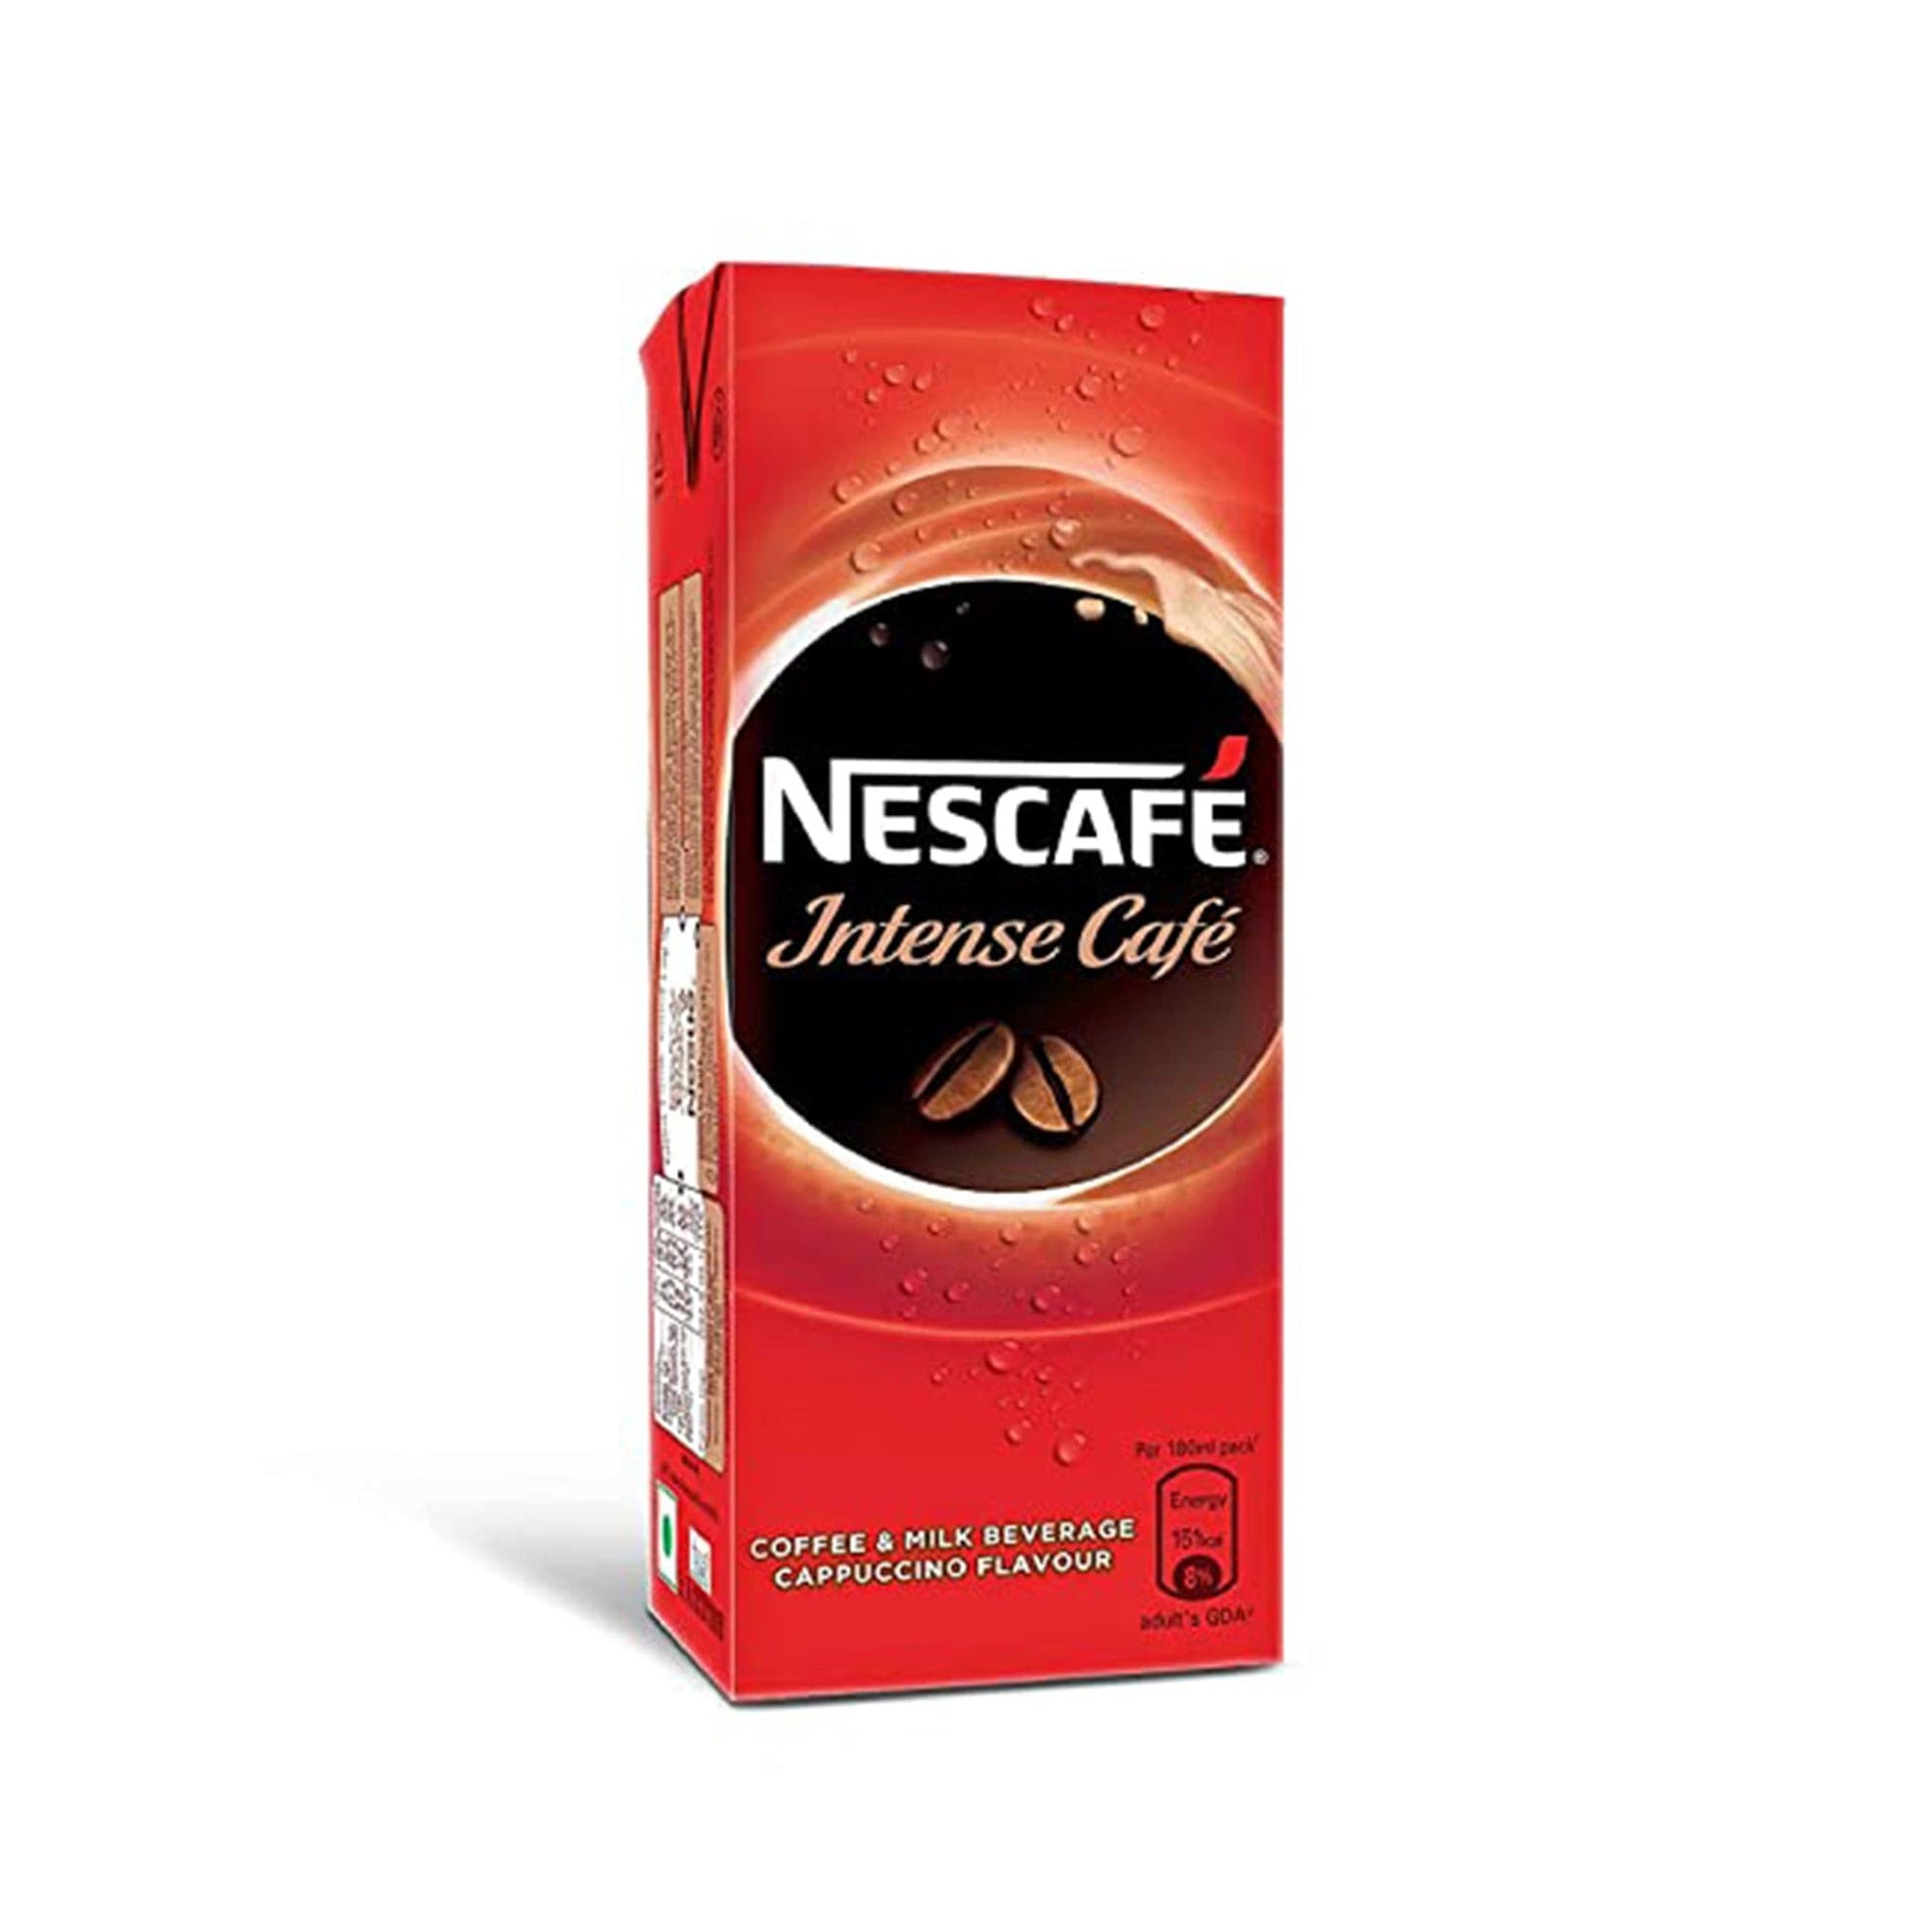 Nescafe Intense Cafe Ready to Drink.